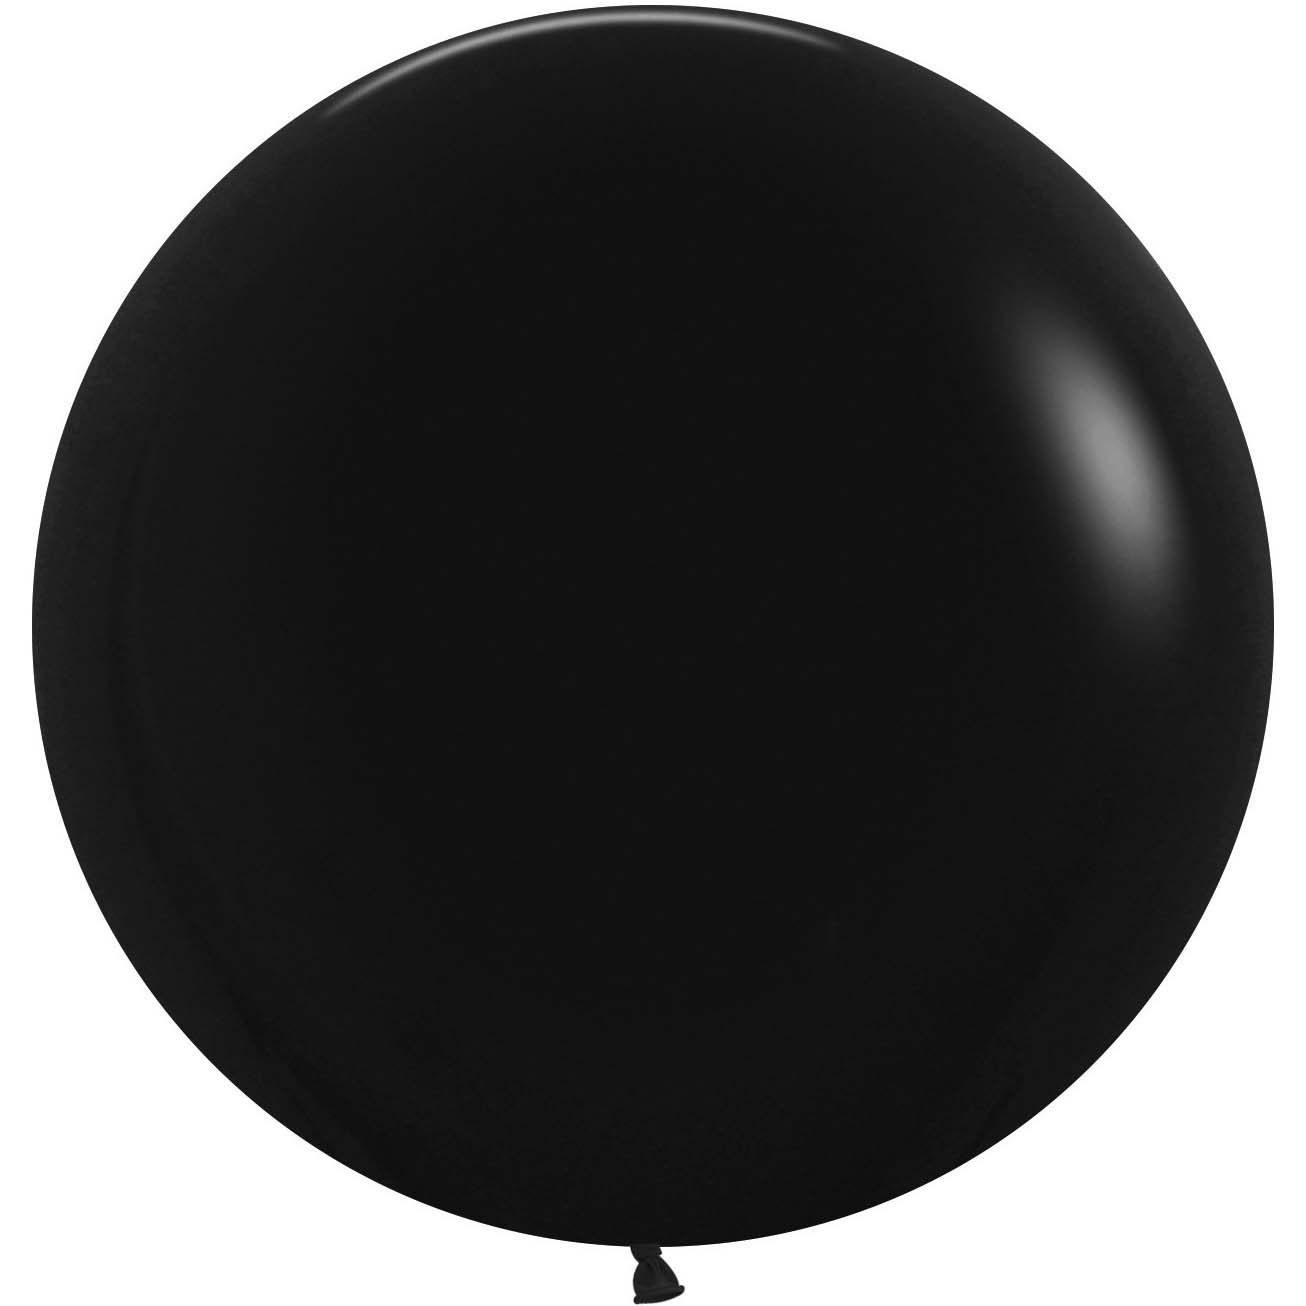 Черный шар против. Шар s 24" пастель черный. Черный шар 60 см Семпертекс. Шар гигант 61 см. Шар гигант 61см черный.